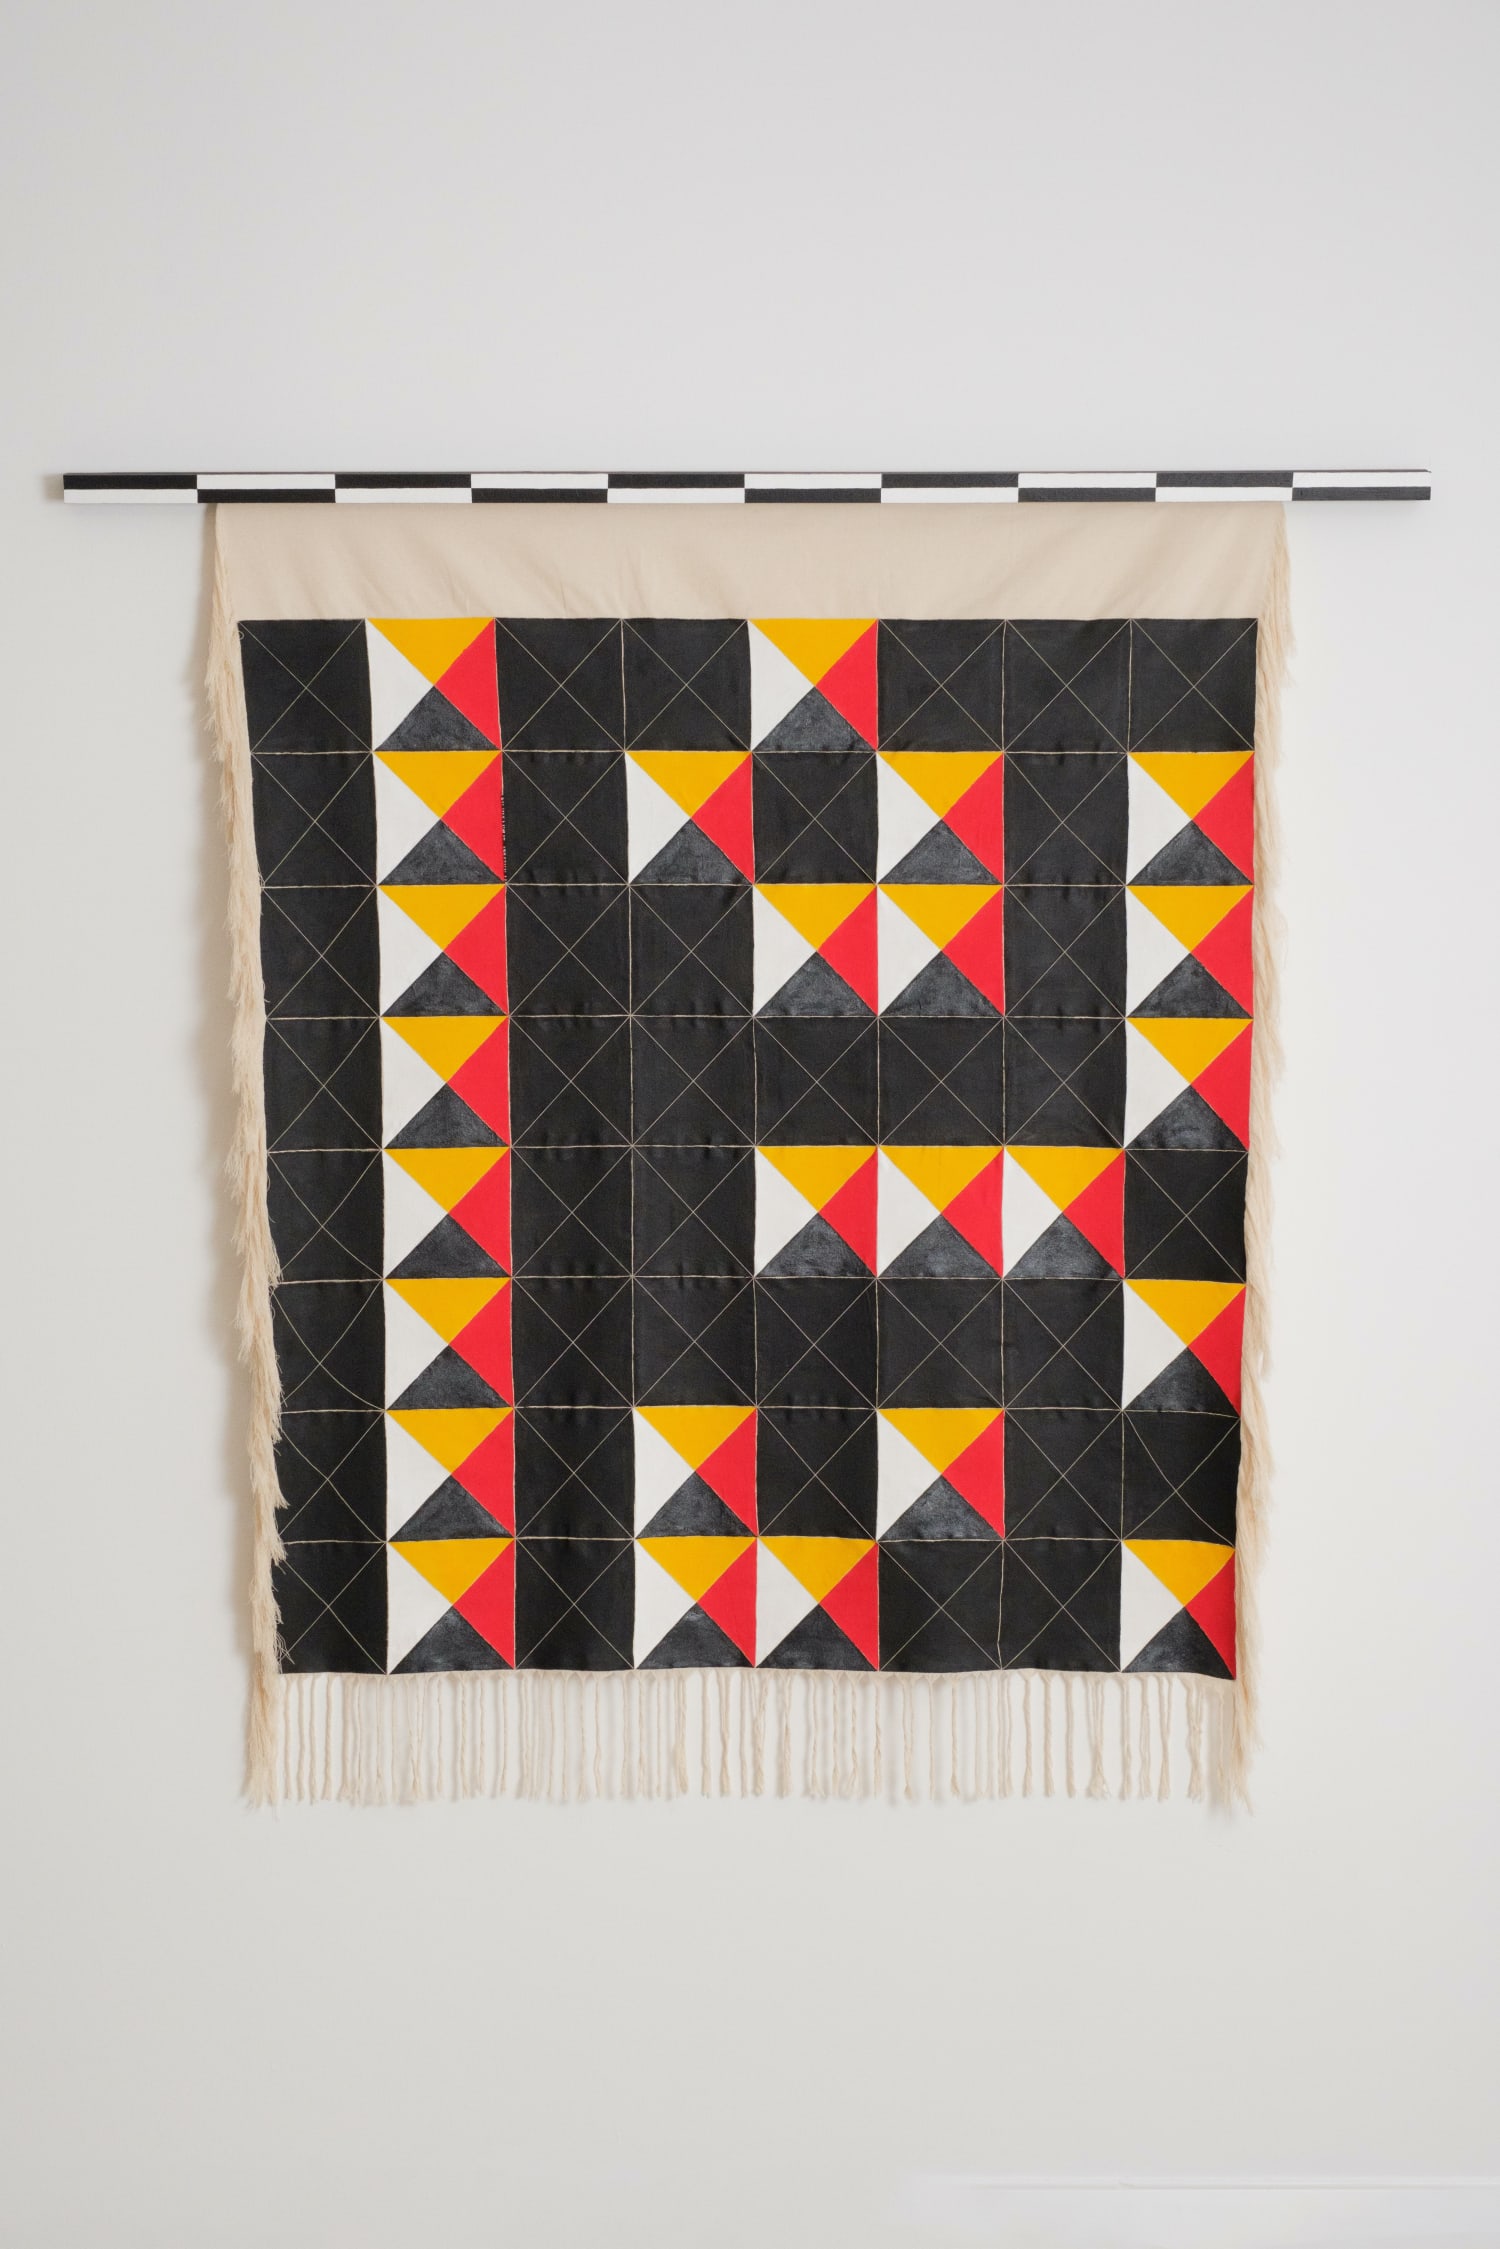 Ana Hernandez, HUMANITY, 2023, Acrylic, cotton thread, repurposed “binary beads” on canvas hanging between reclaimed wood, 58” x 60” x 1.5”